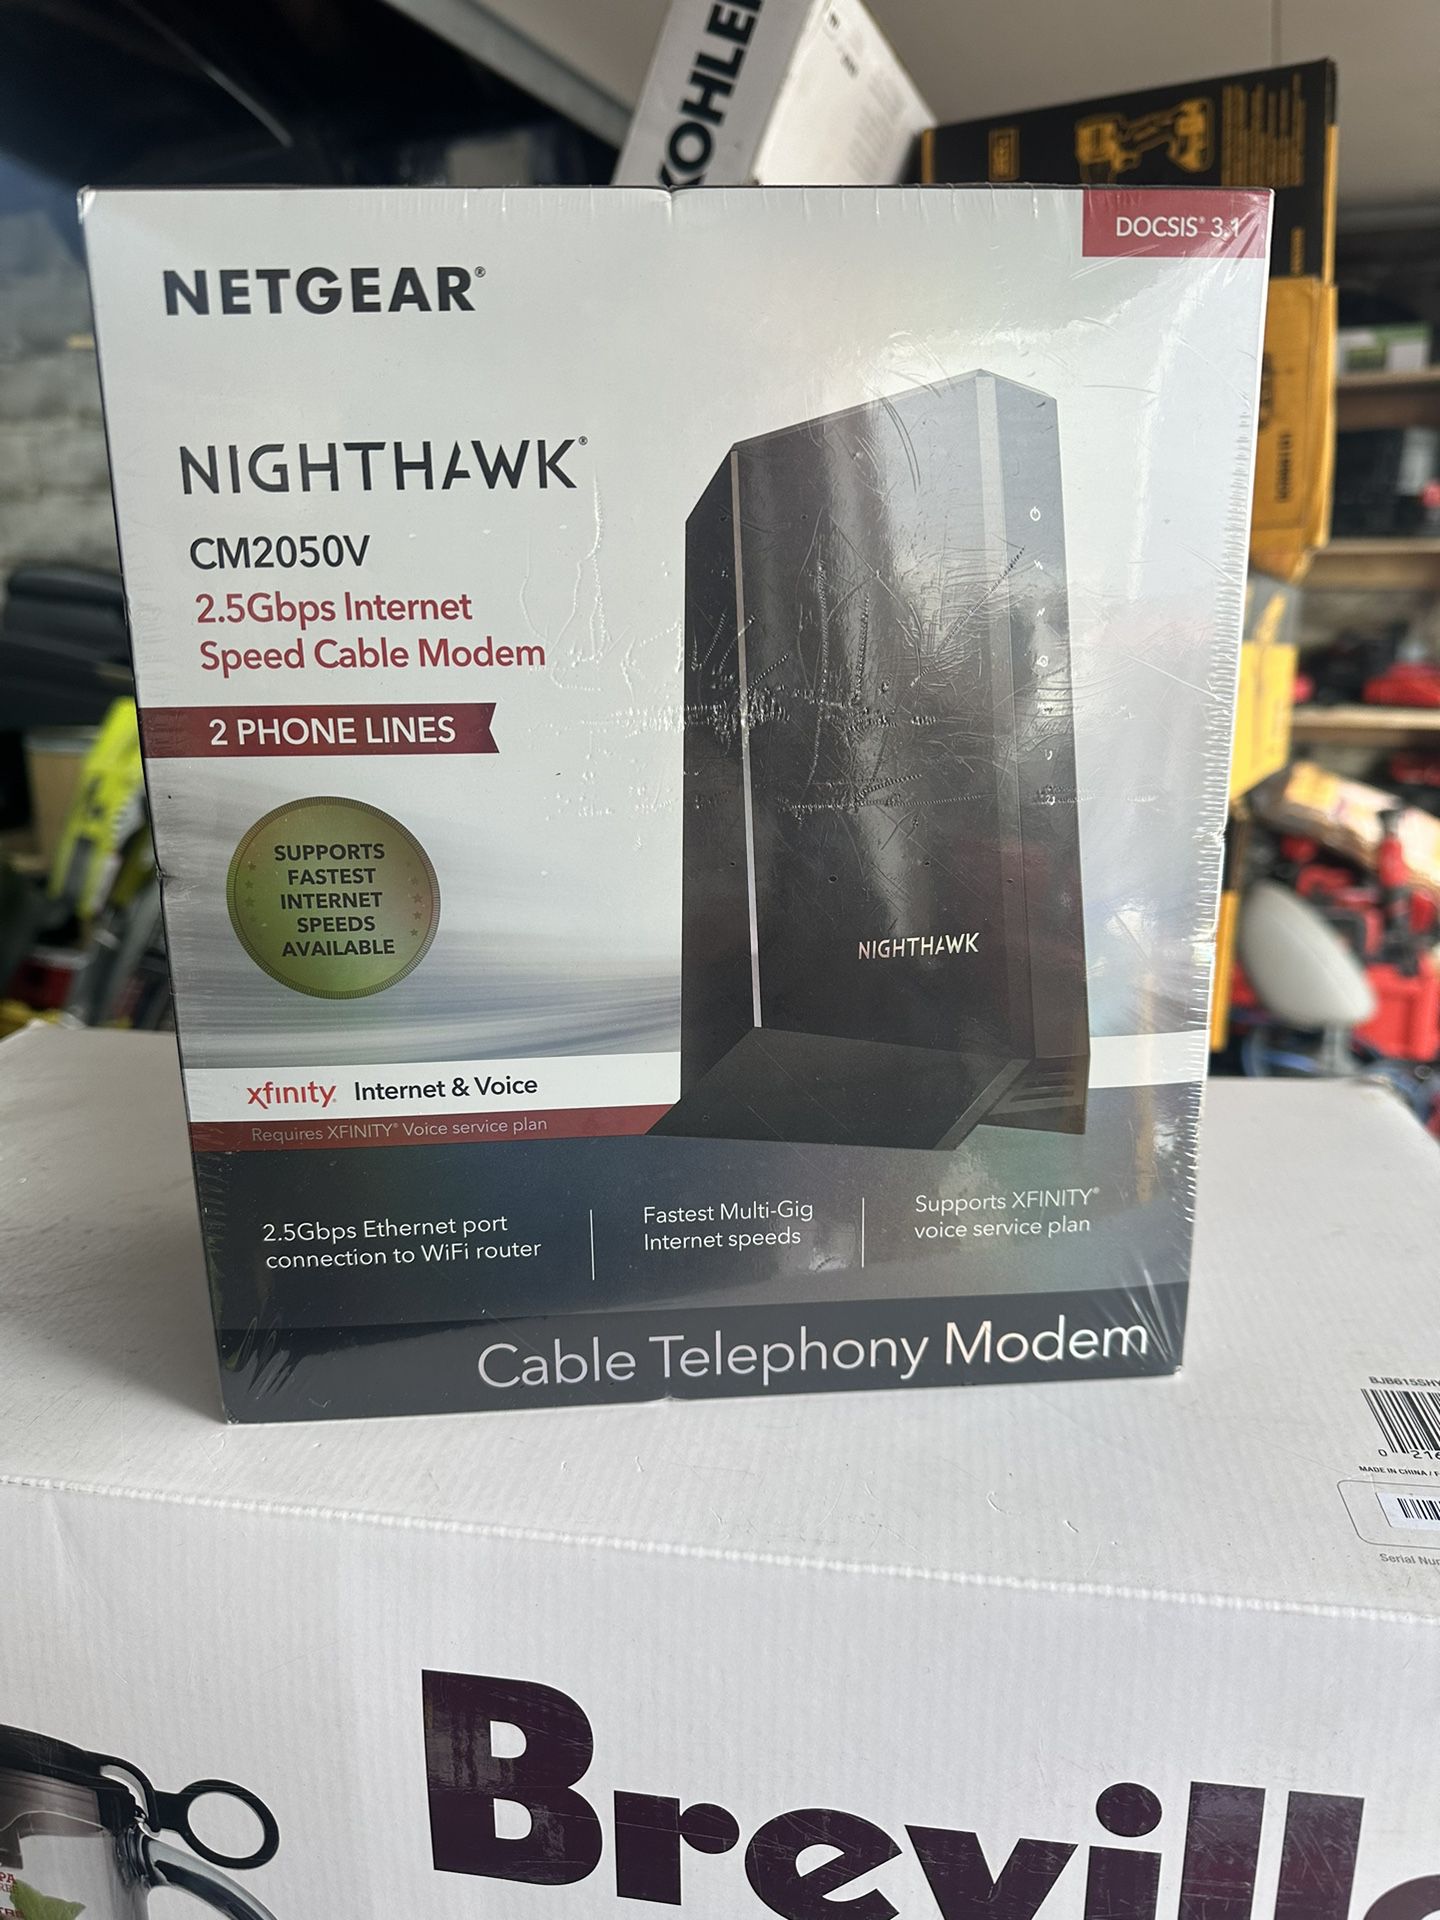 Netgear Nighthawk Cm2050v Modem (new)